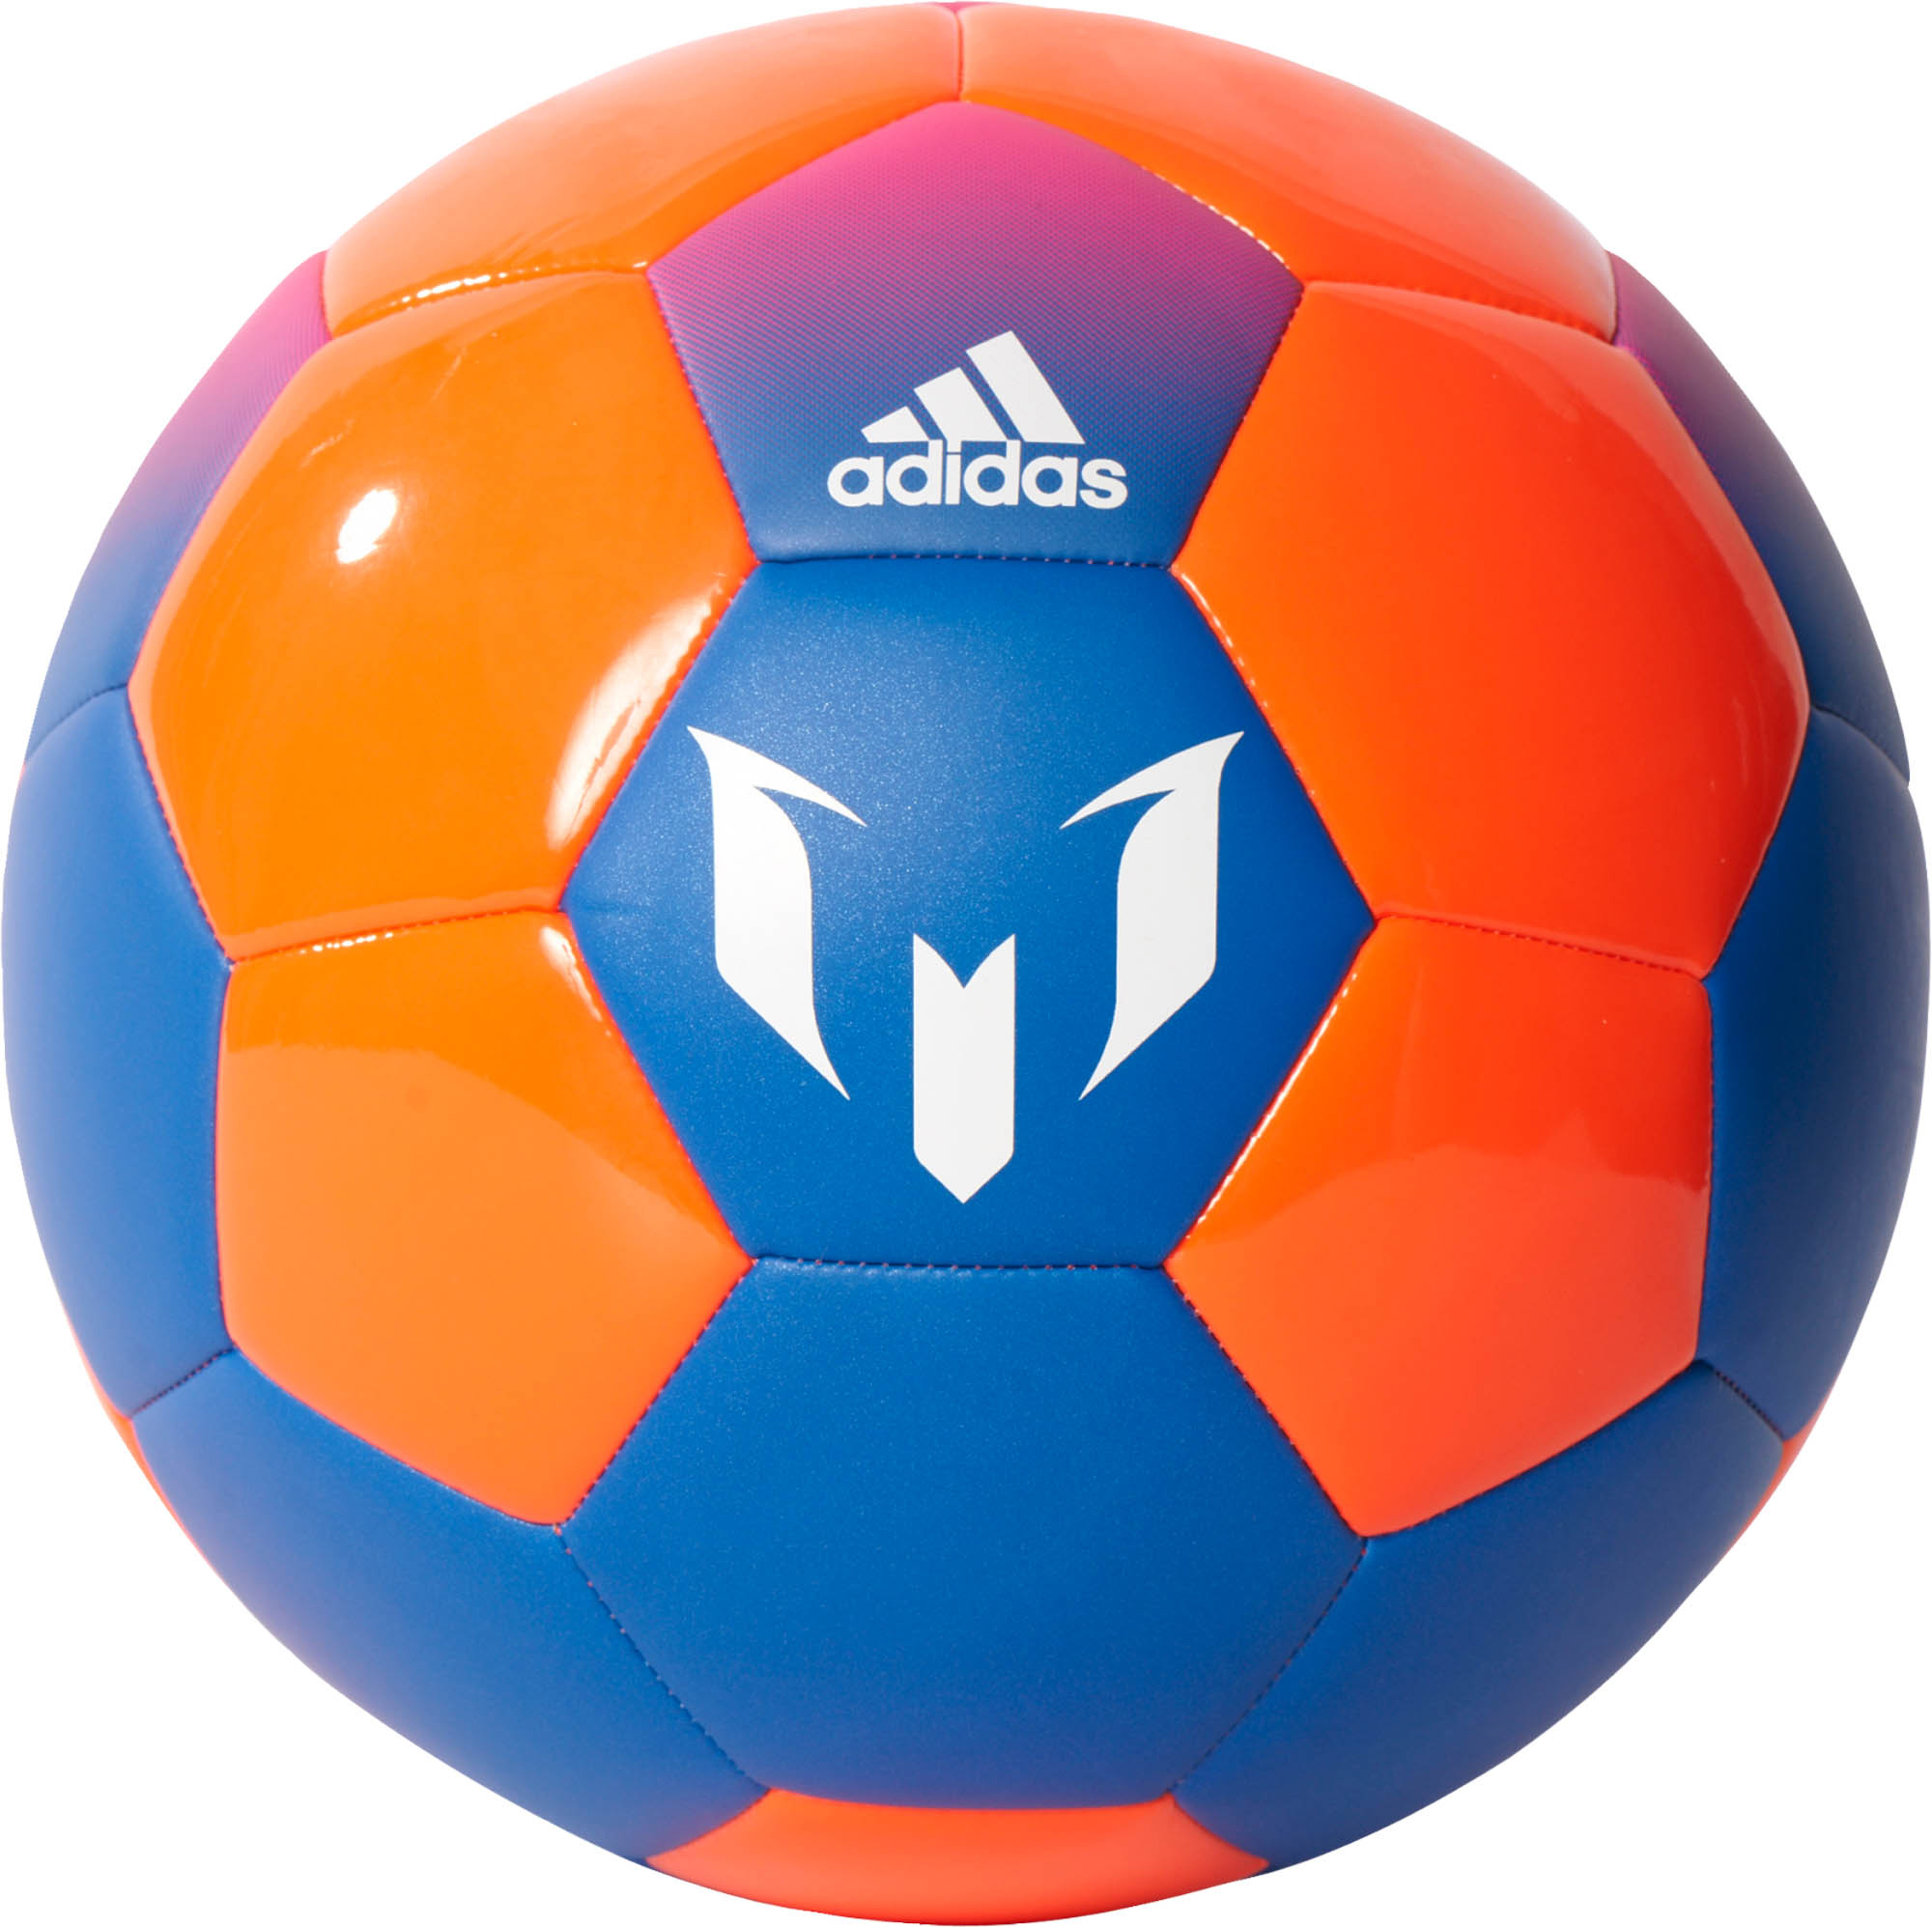 adidas Messi Soccer Ball - Blue adidas Soccer Balls